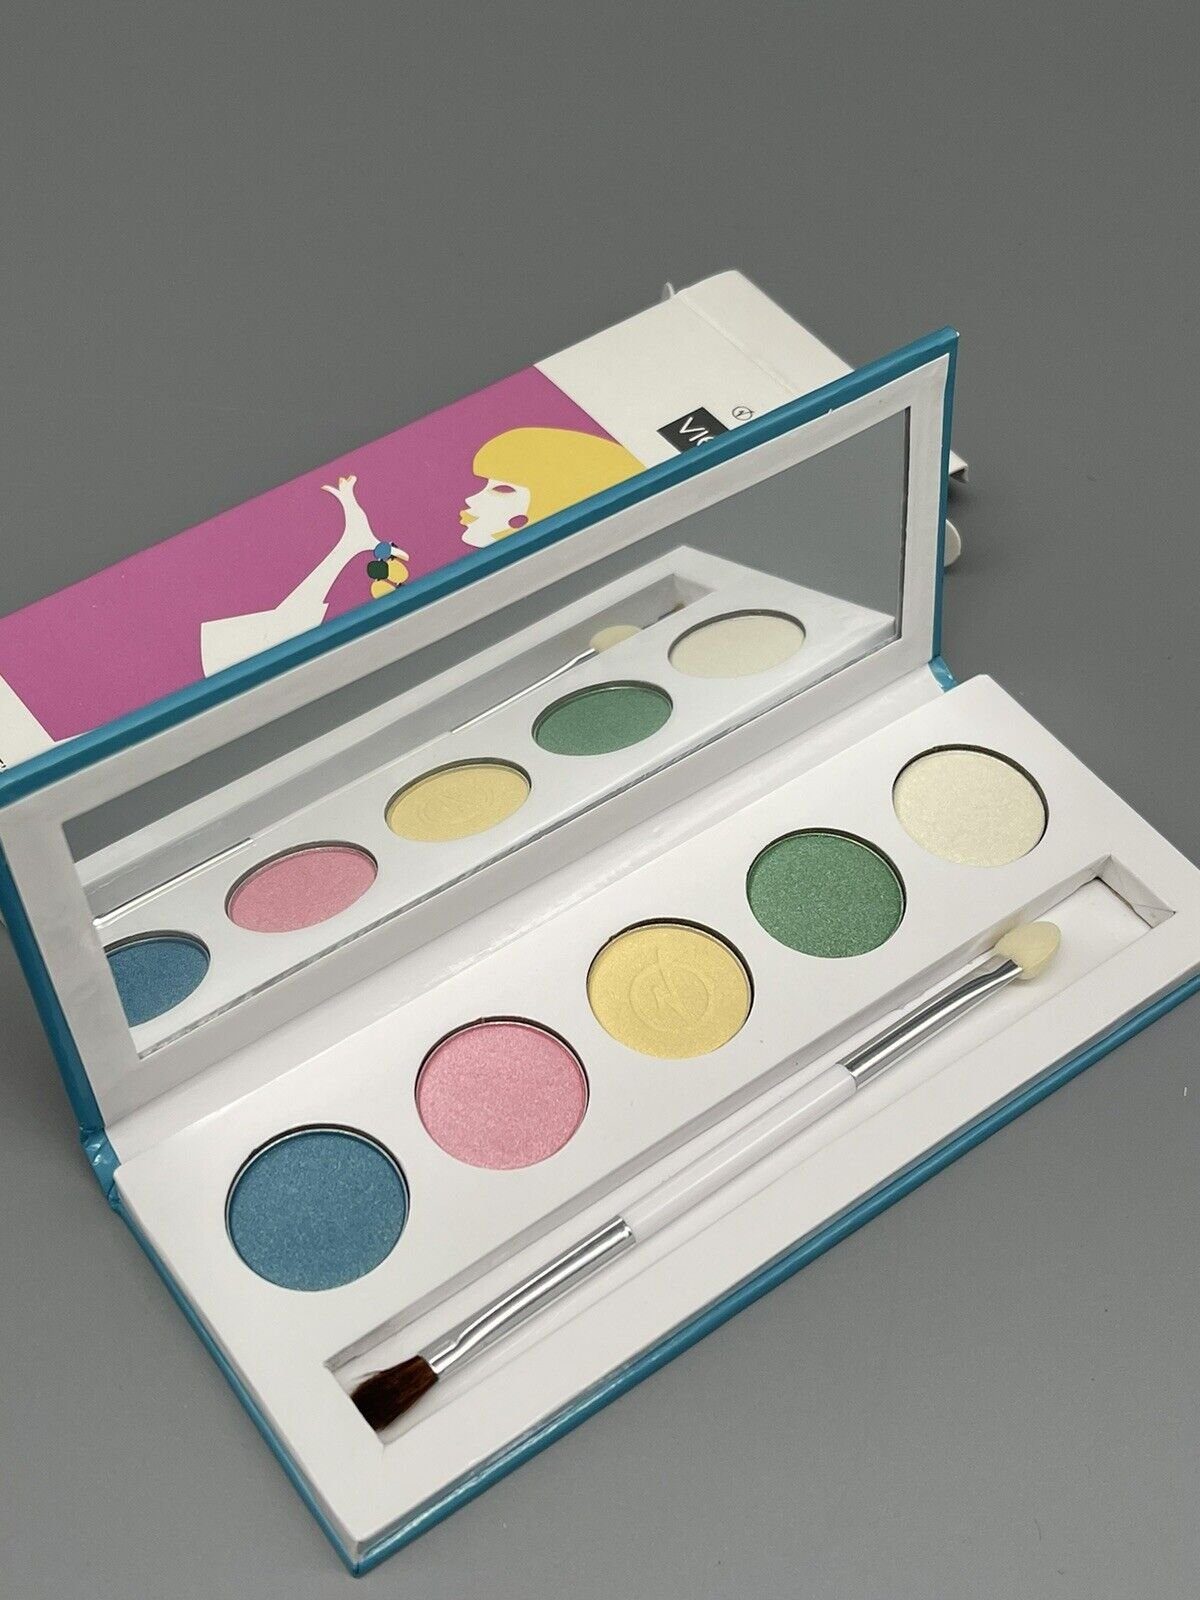 A-VIEW Lidschatten 5 Farben Eyeshadow Make-Up Set Glitzer Schminke Lidschatten